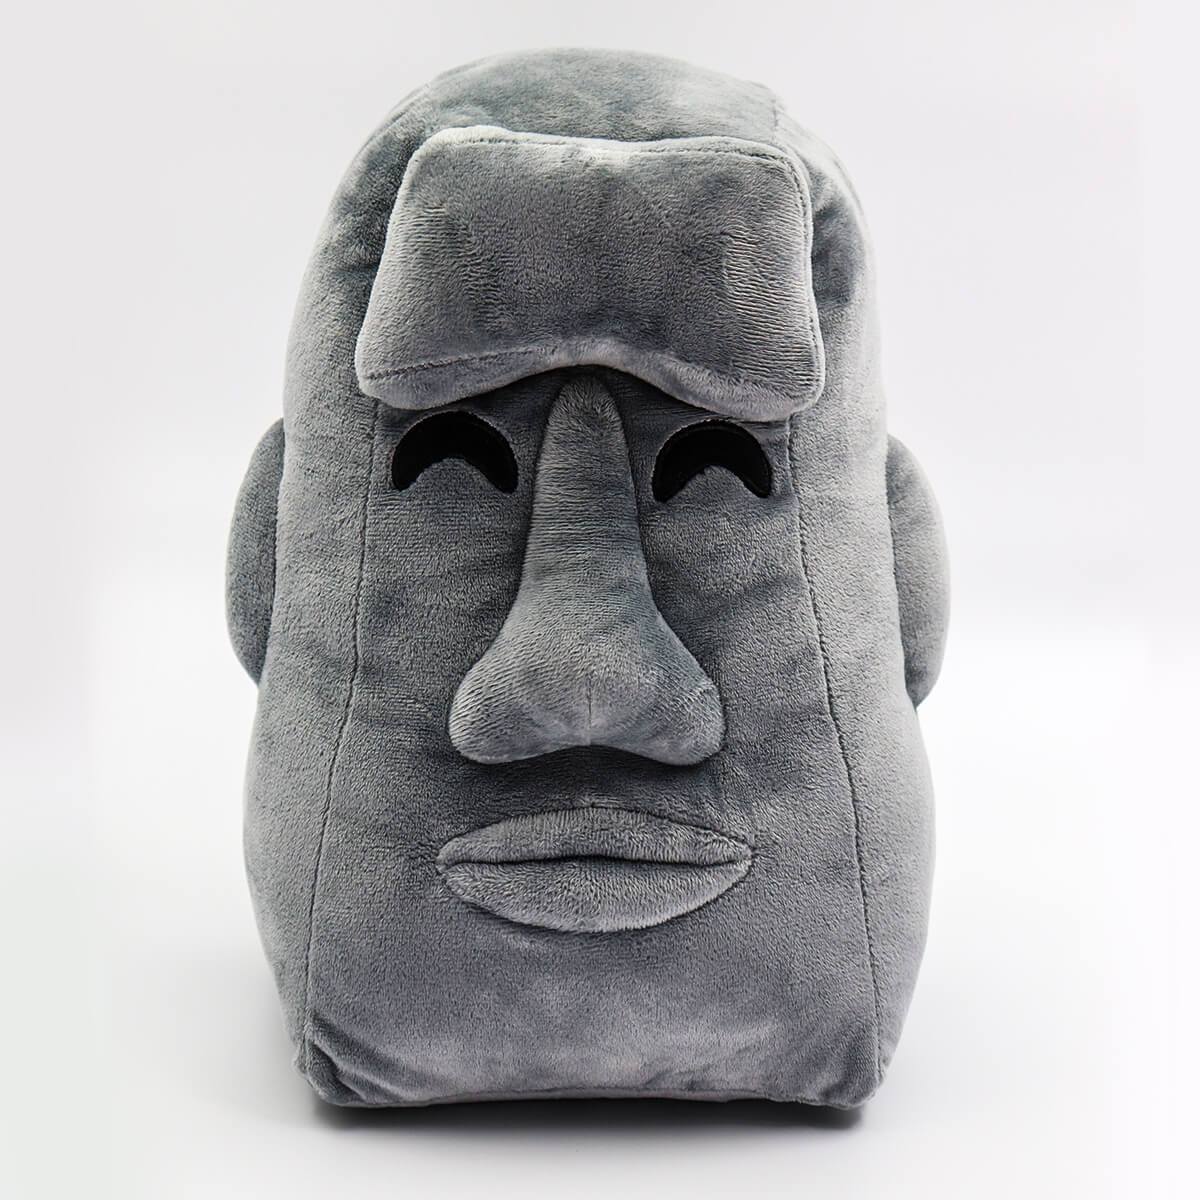 Moai - Moyai Emoji - Pillow